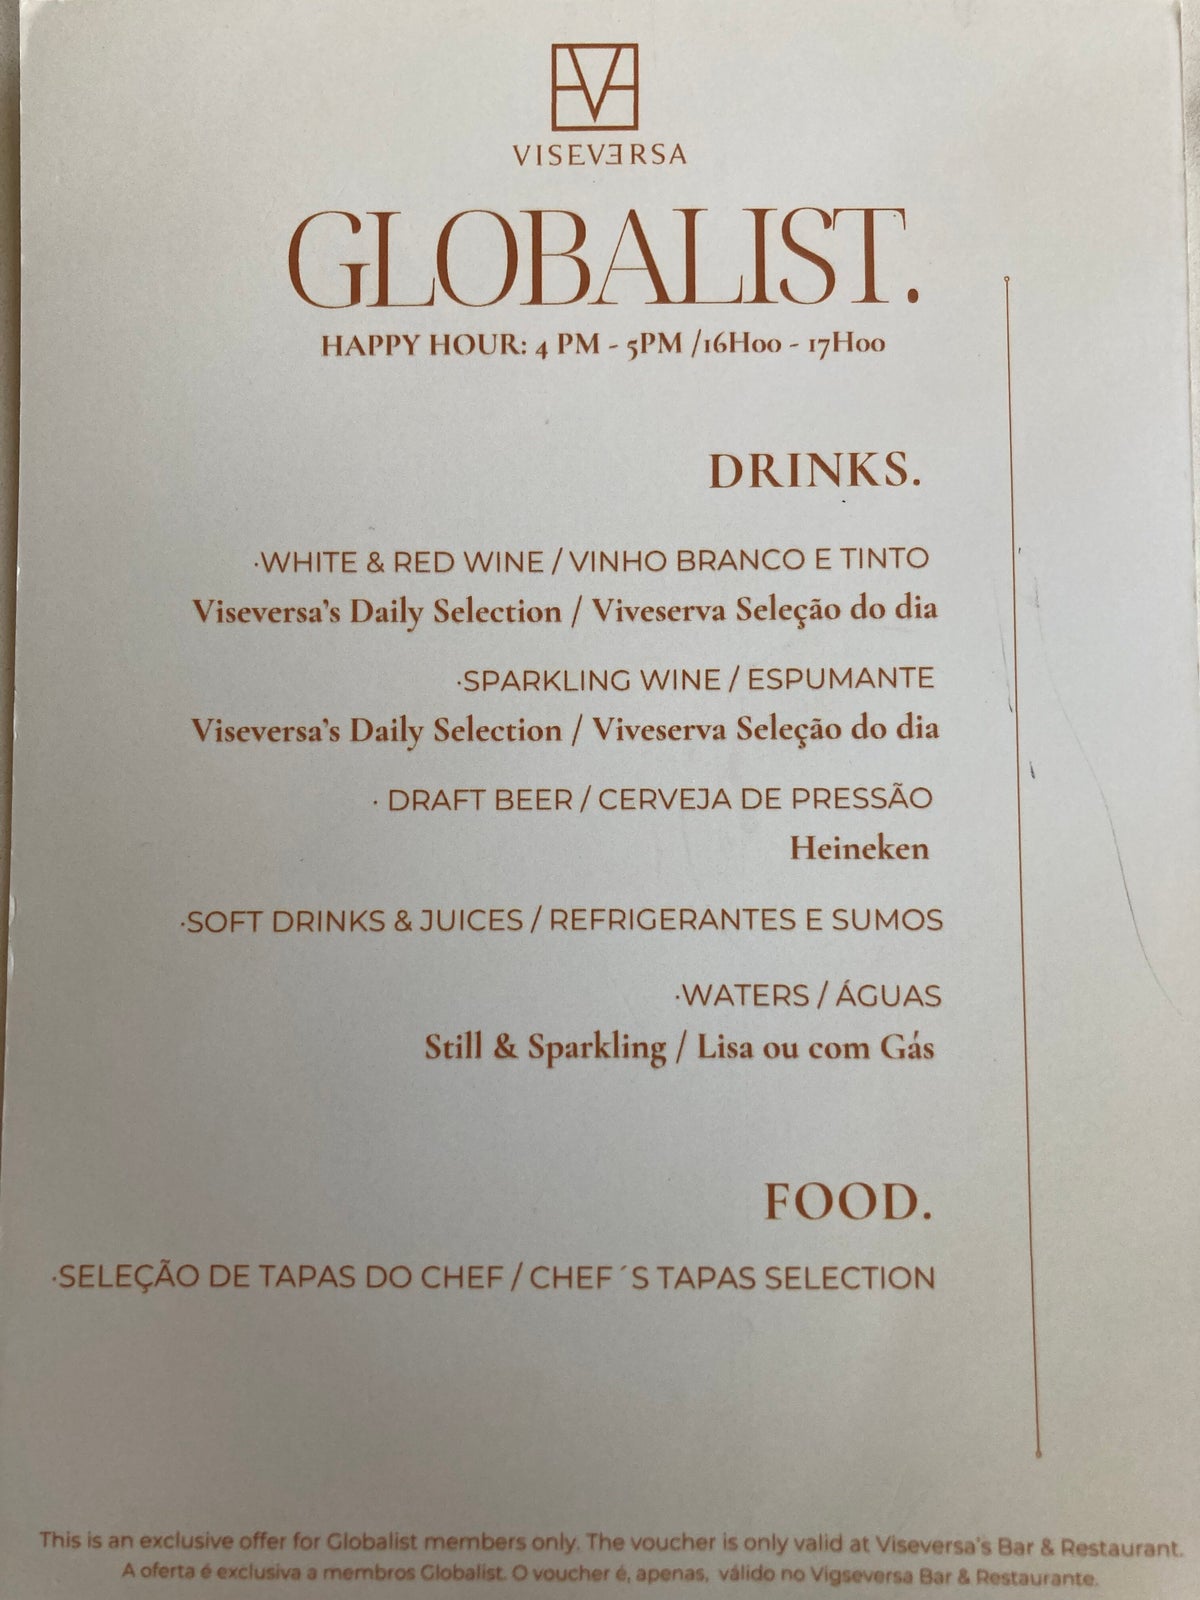 Hyatt Regency Lisbon Globalist happy hour menu